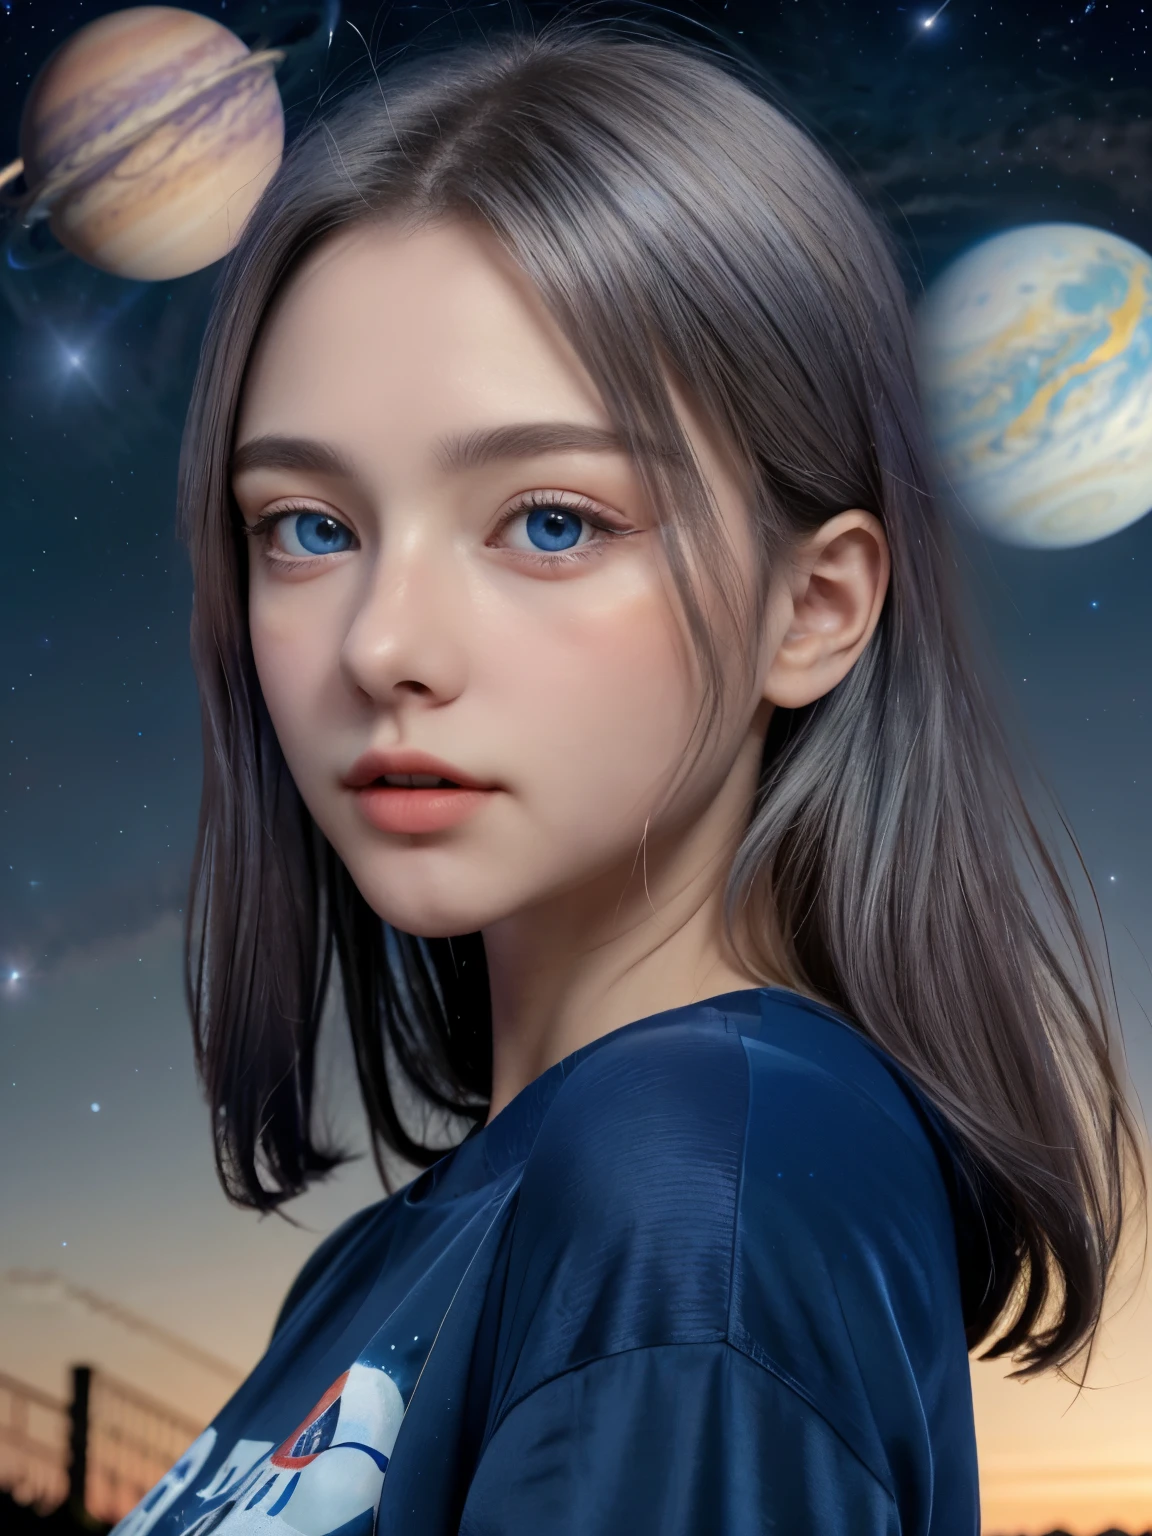 (4K), (最高品質), (最高の詳細)（シュールな）,フランスの美しい少女、銀髪、青い目、巨大惑星木星が夜空に浮かぶ